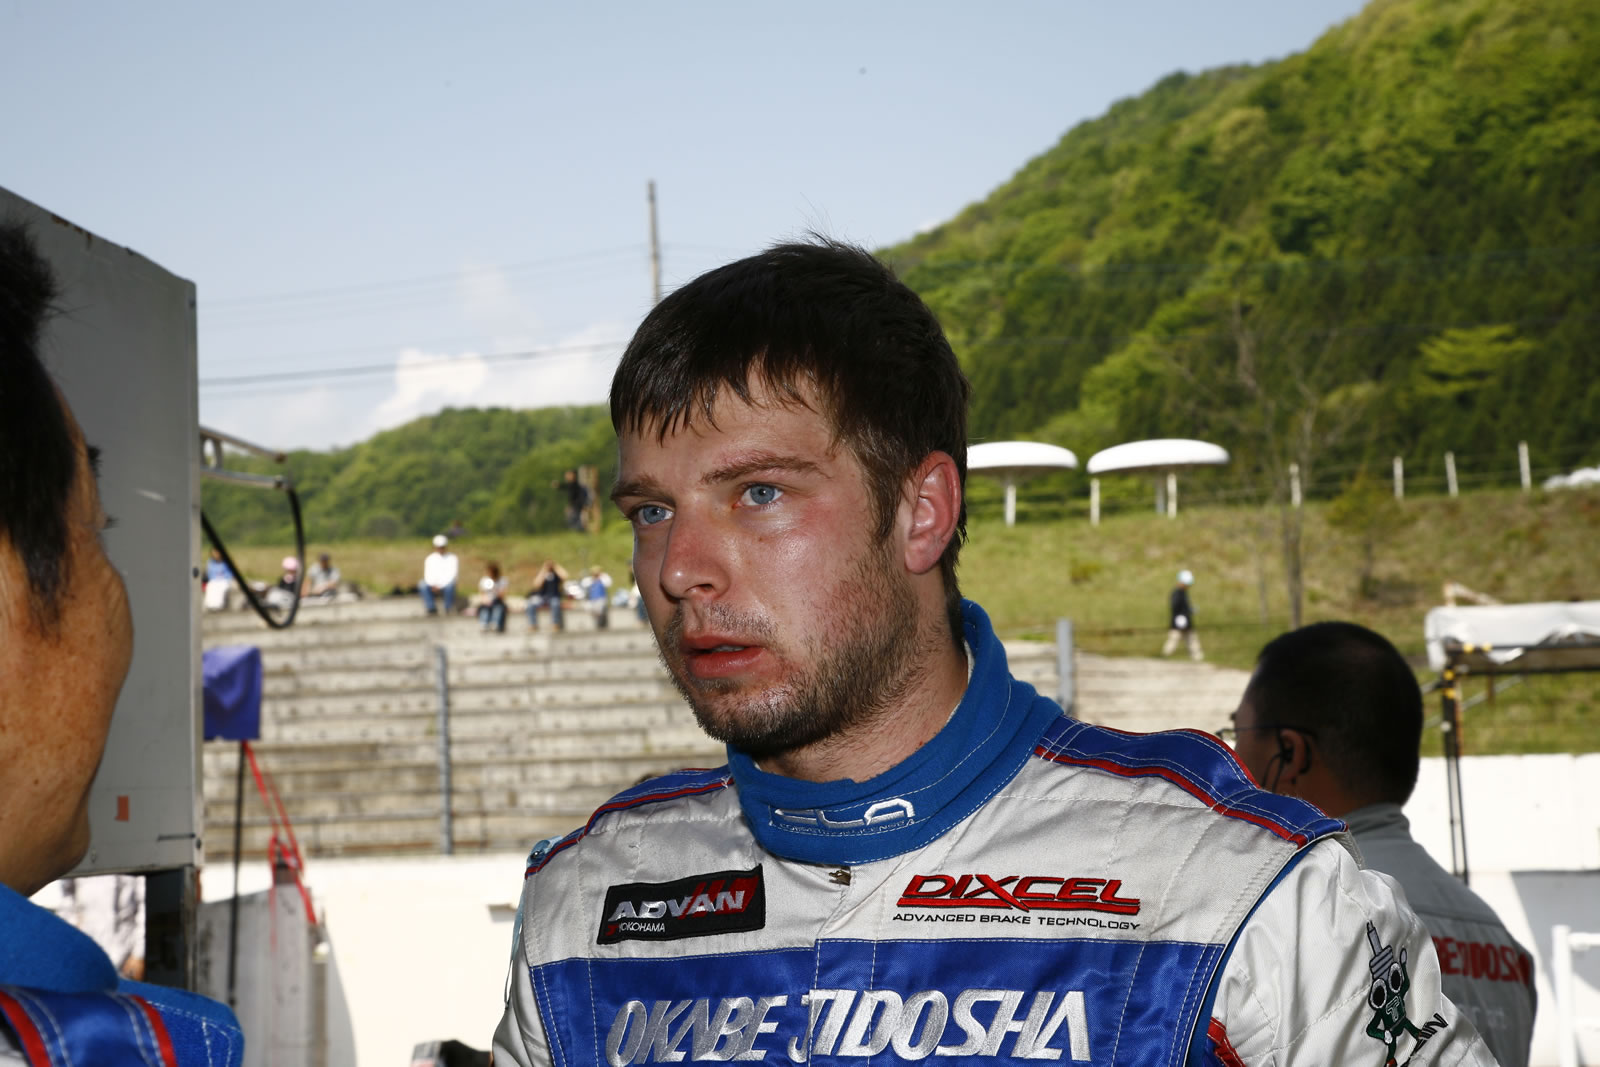 Igor Sushko at 2008 Sendai Hiland 4HR race.